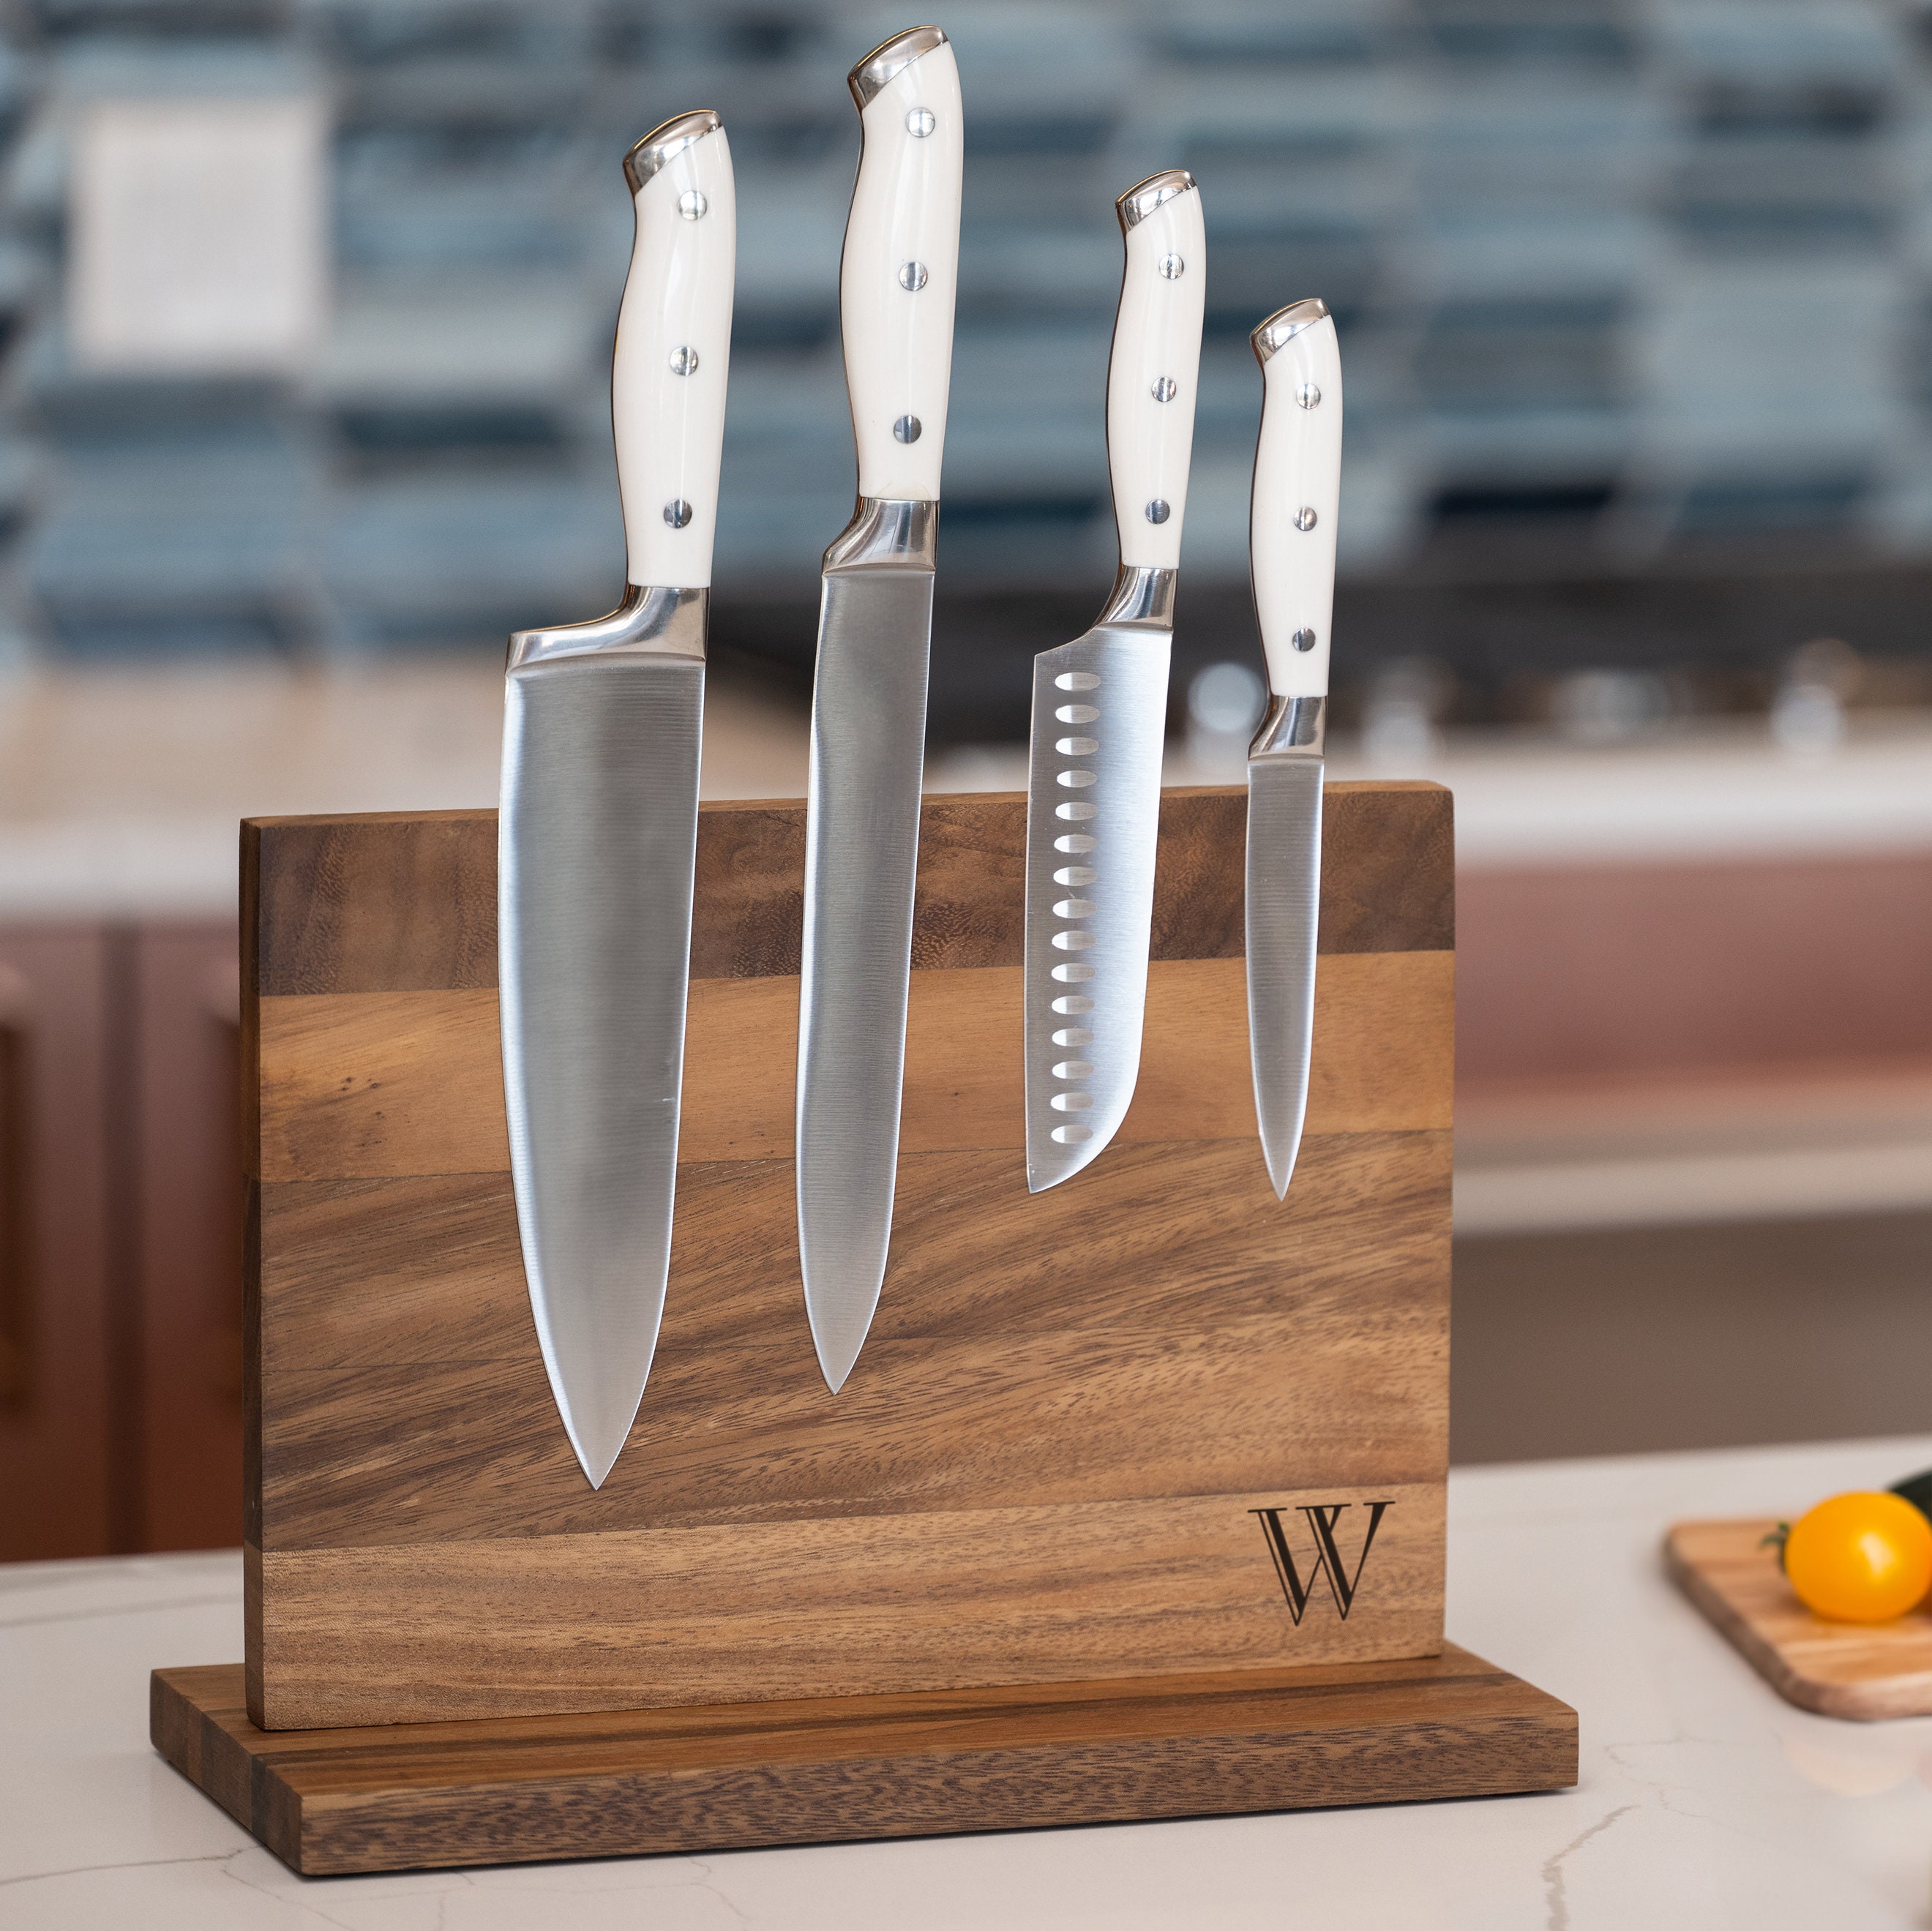 VEVOR Magnetic Knife Block 10-Knife Holder Double Sided Magnetic Knife Stand Storage Acacia Wood Knife Block